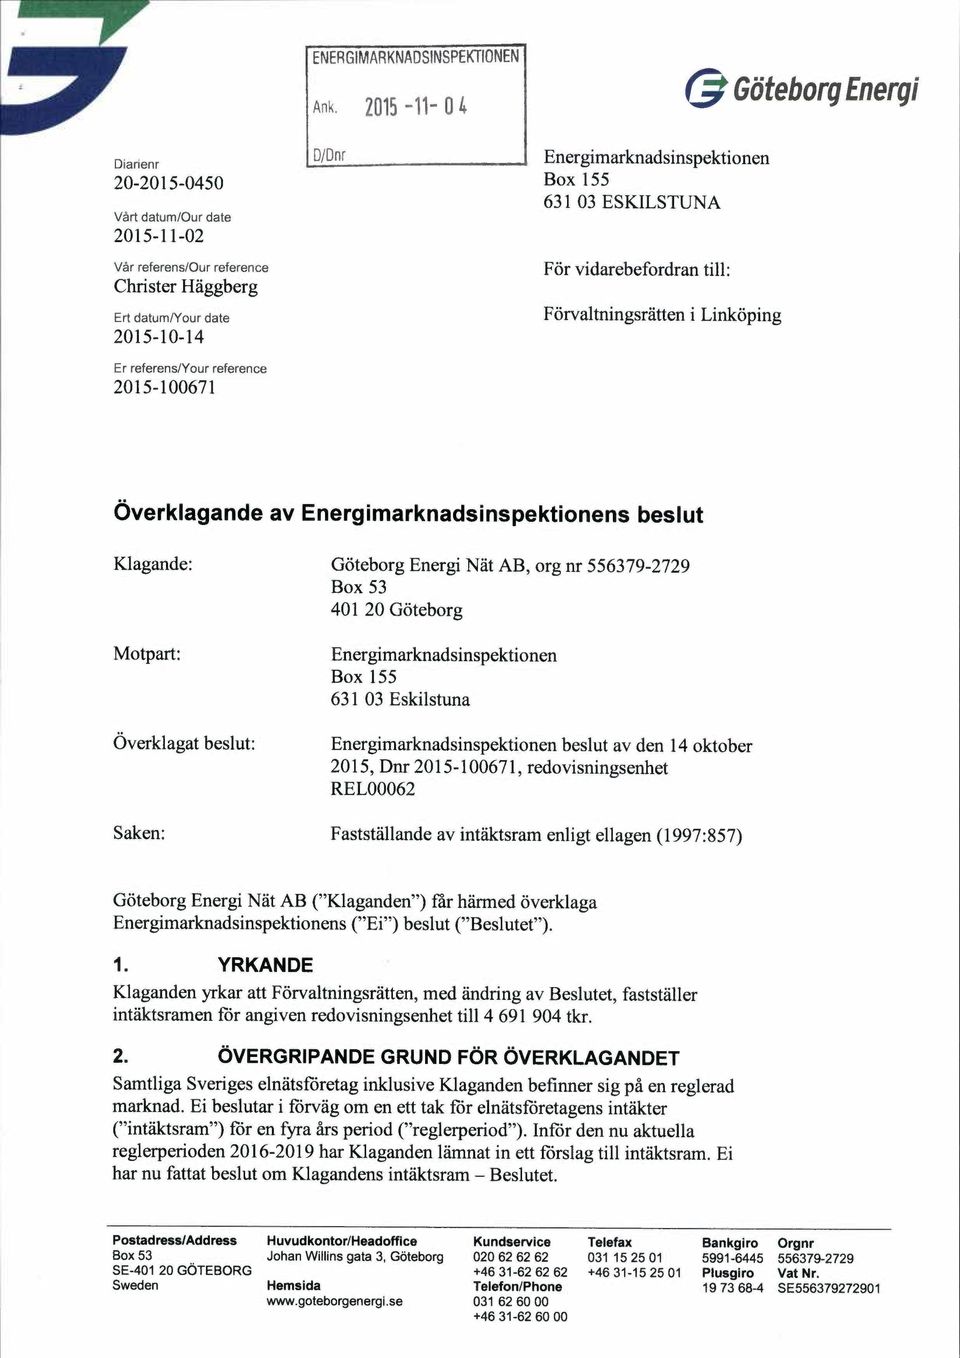 Klagande: Goteborg Energi Nat AB, org nr Box 53 401 20 Goteborg Motpart: Energimarknadsinspektionen Box 155 631 03 Eskilstuna Overklagat beslut: Energimarknadsinspektionen beslut av den 14 oktober